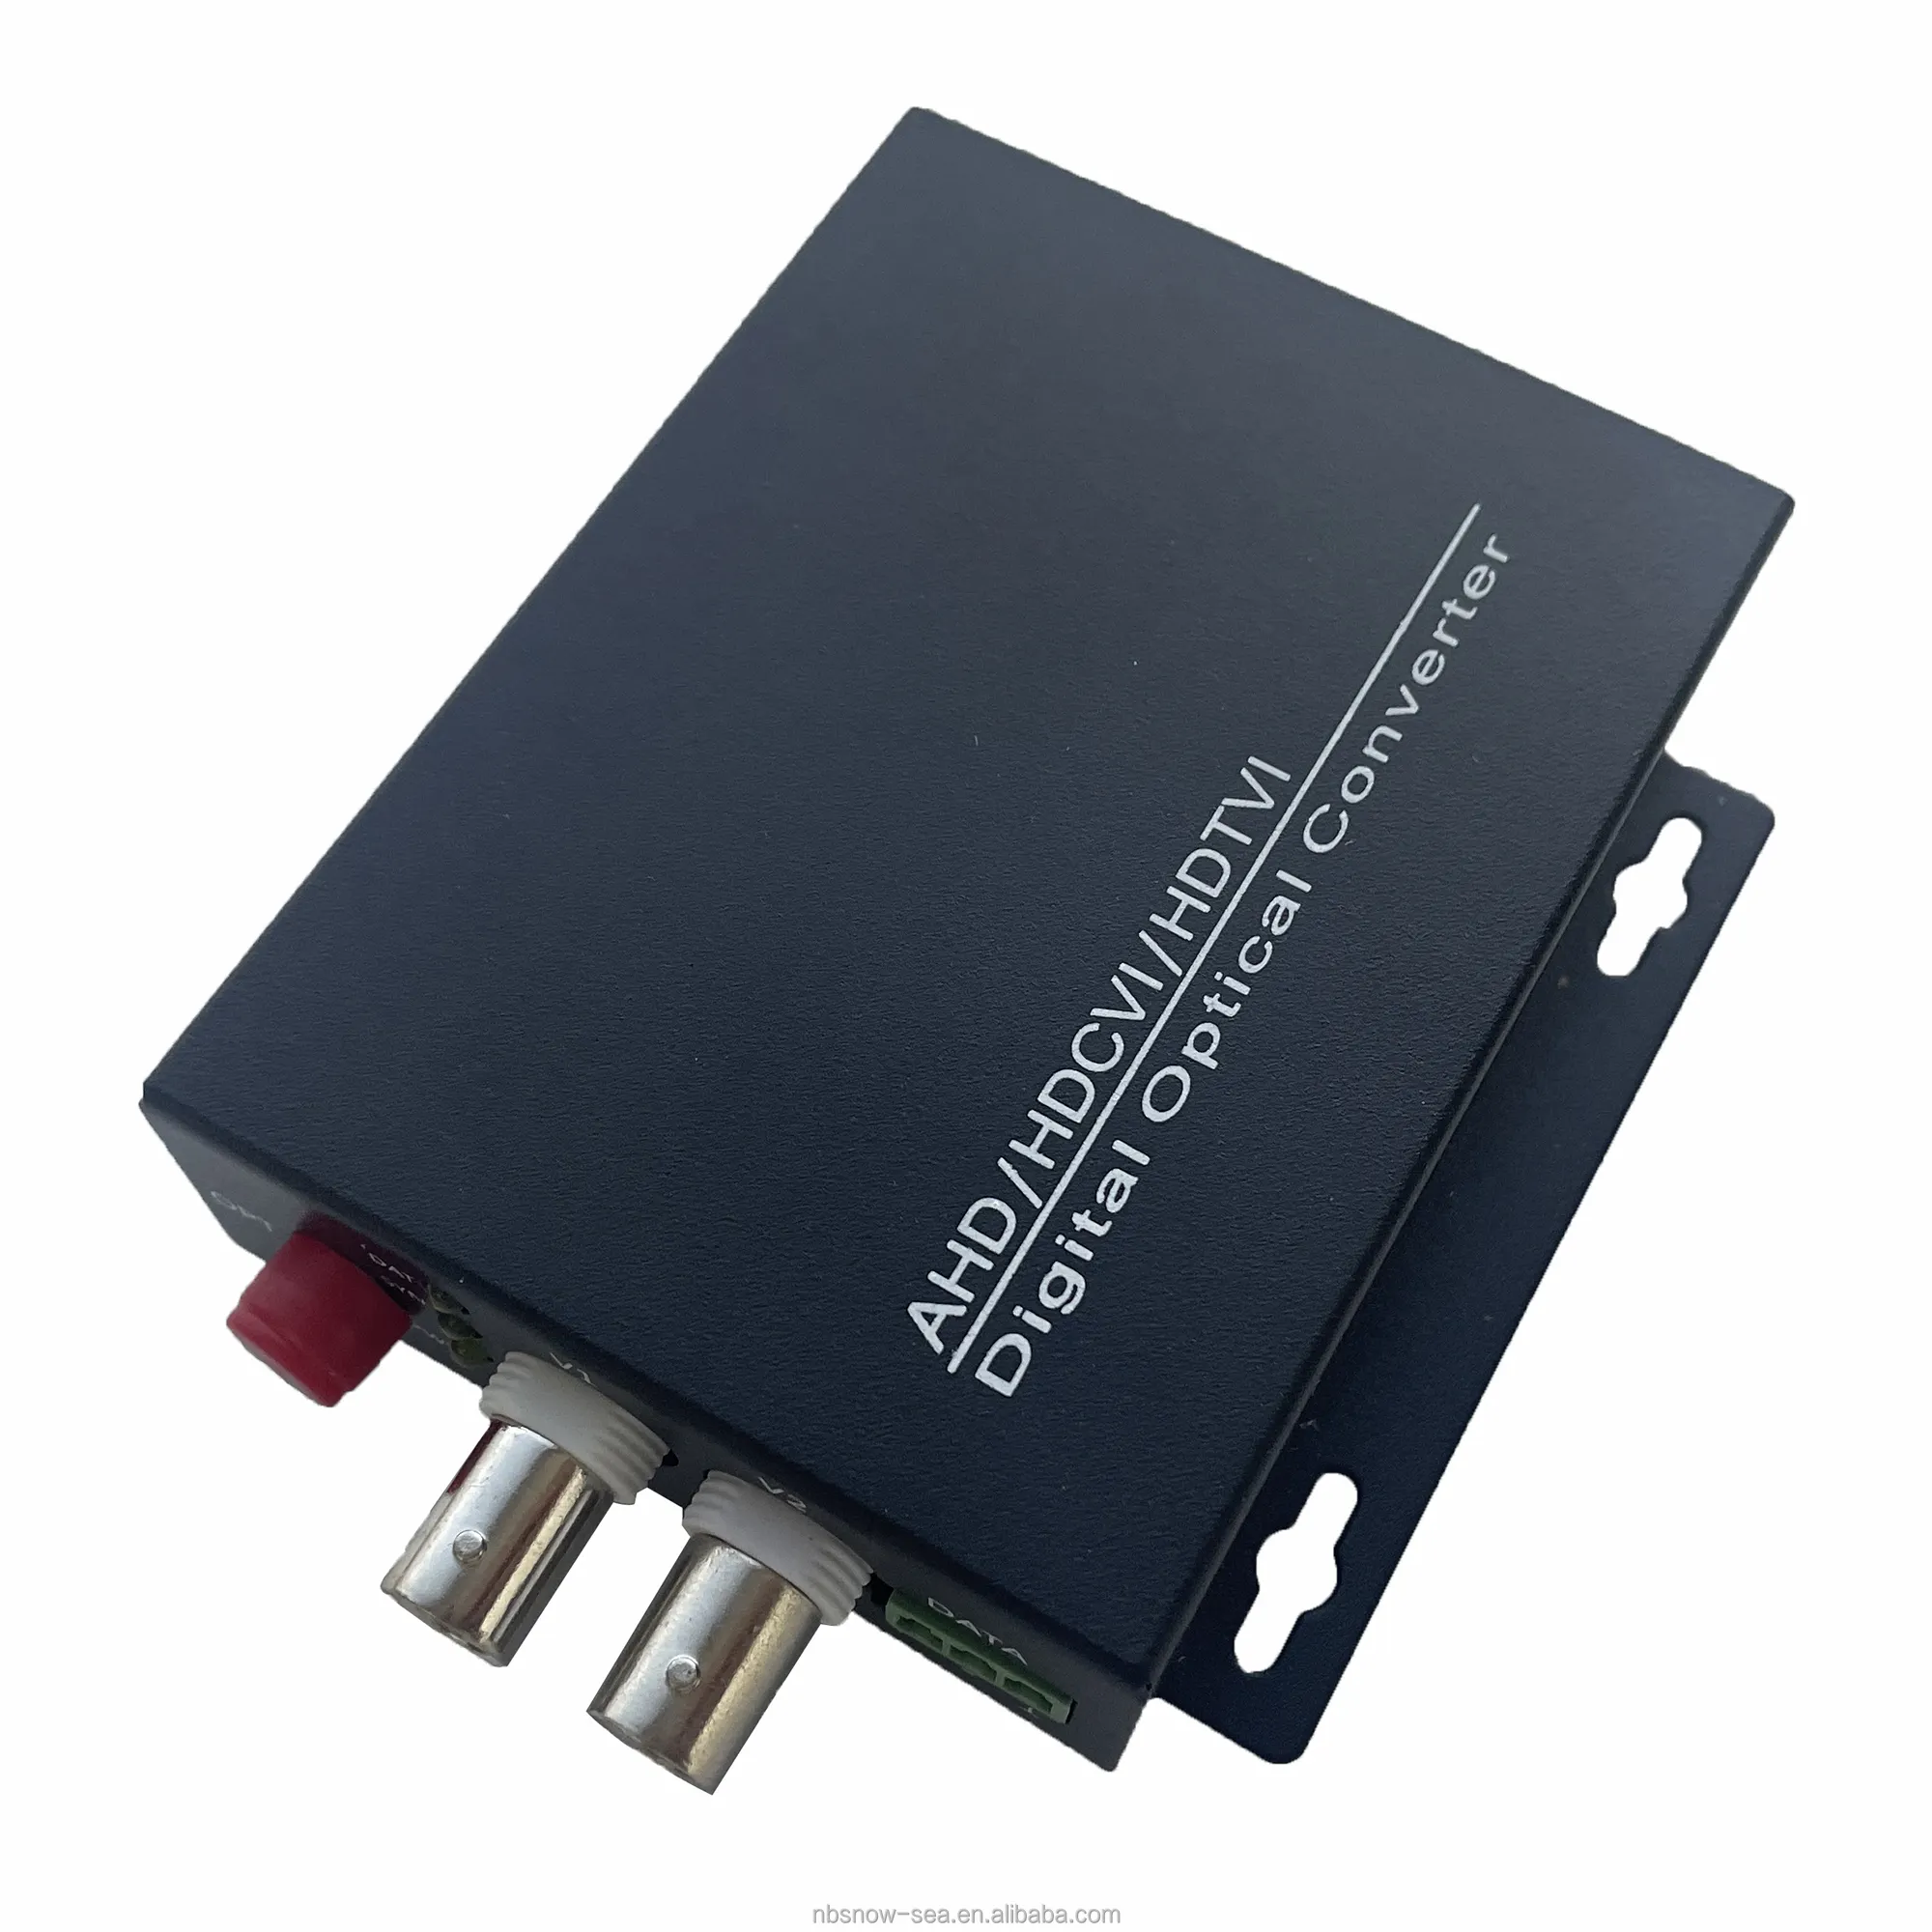 2 Ch 1080P convertitore CVI/AHD convertitore da fibra ottica a BNC convertitore Video digitale trasmettitore e ricevitore in fibra ottica